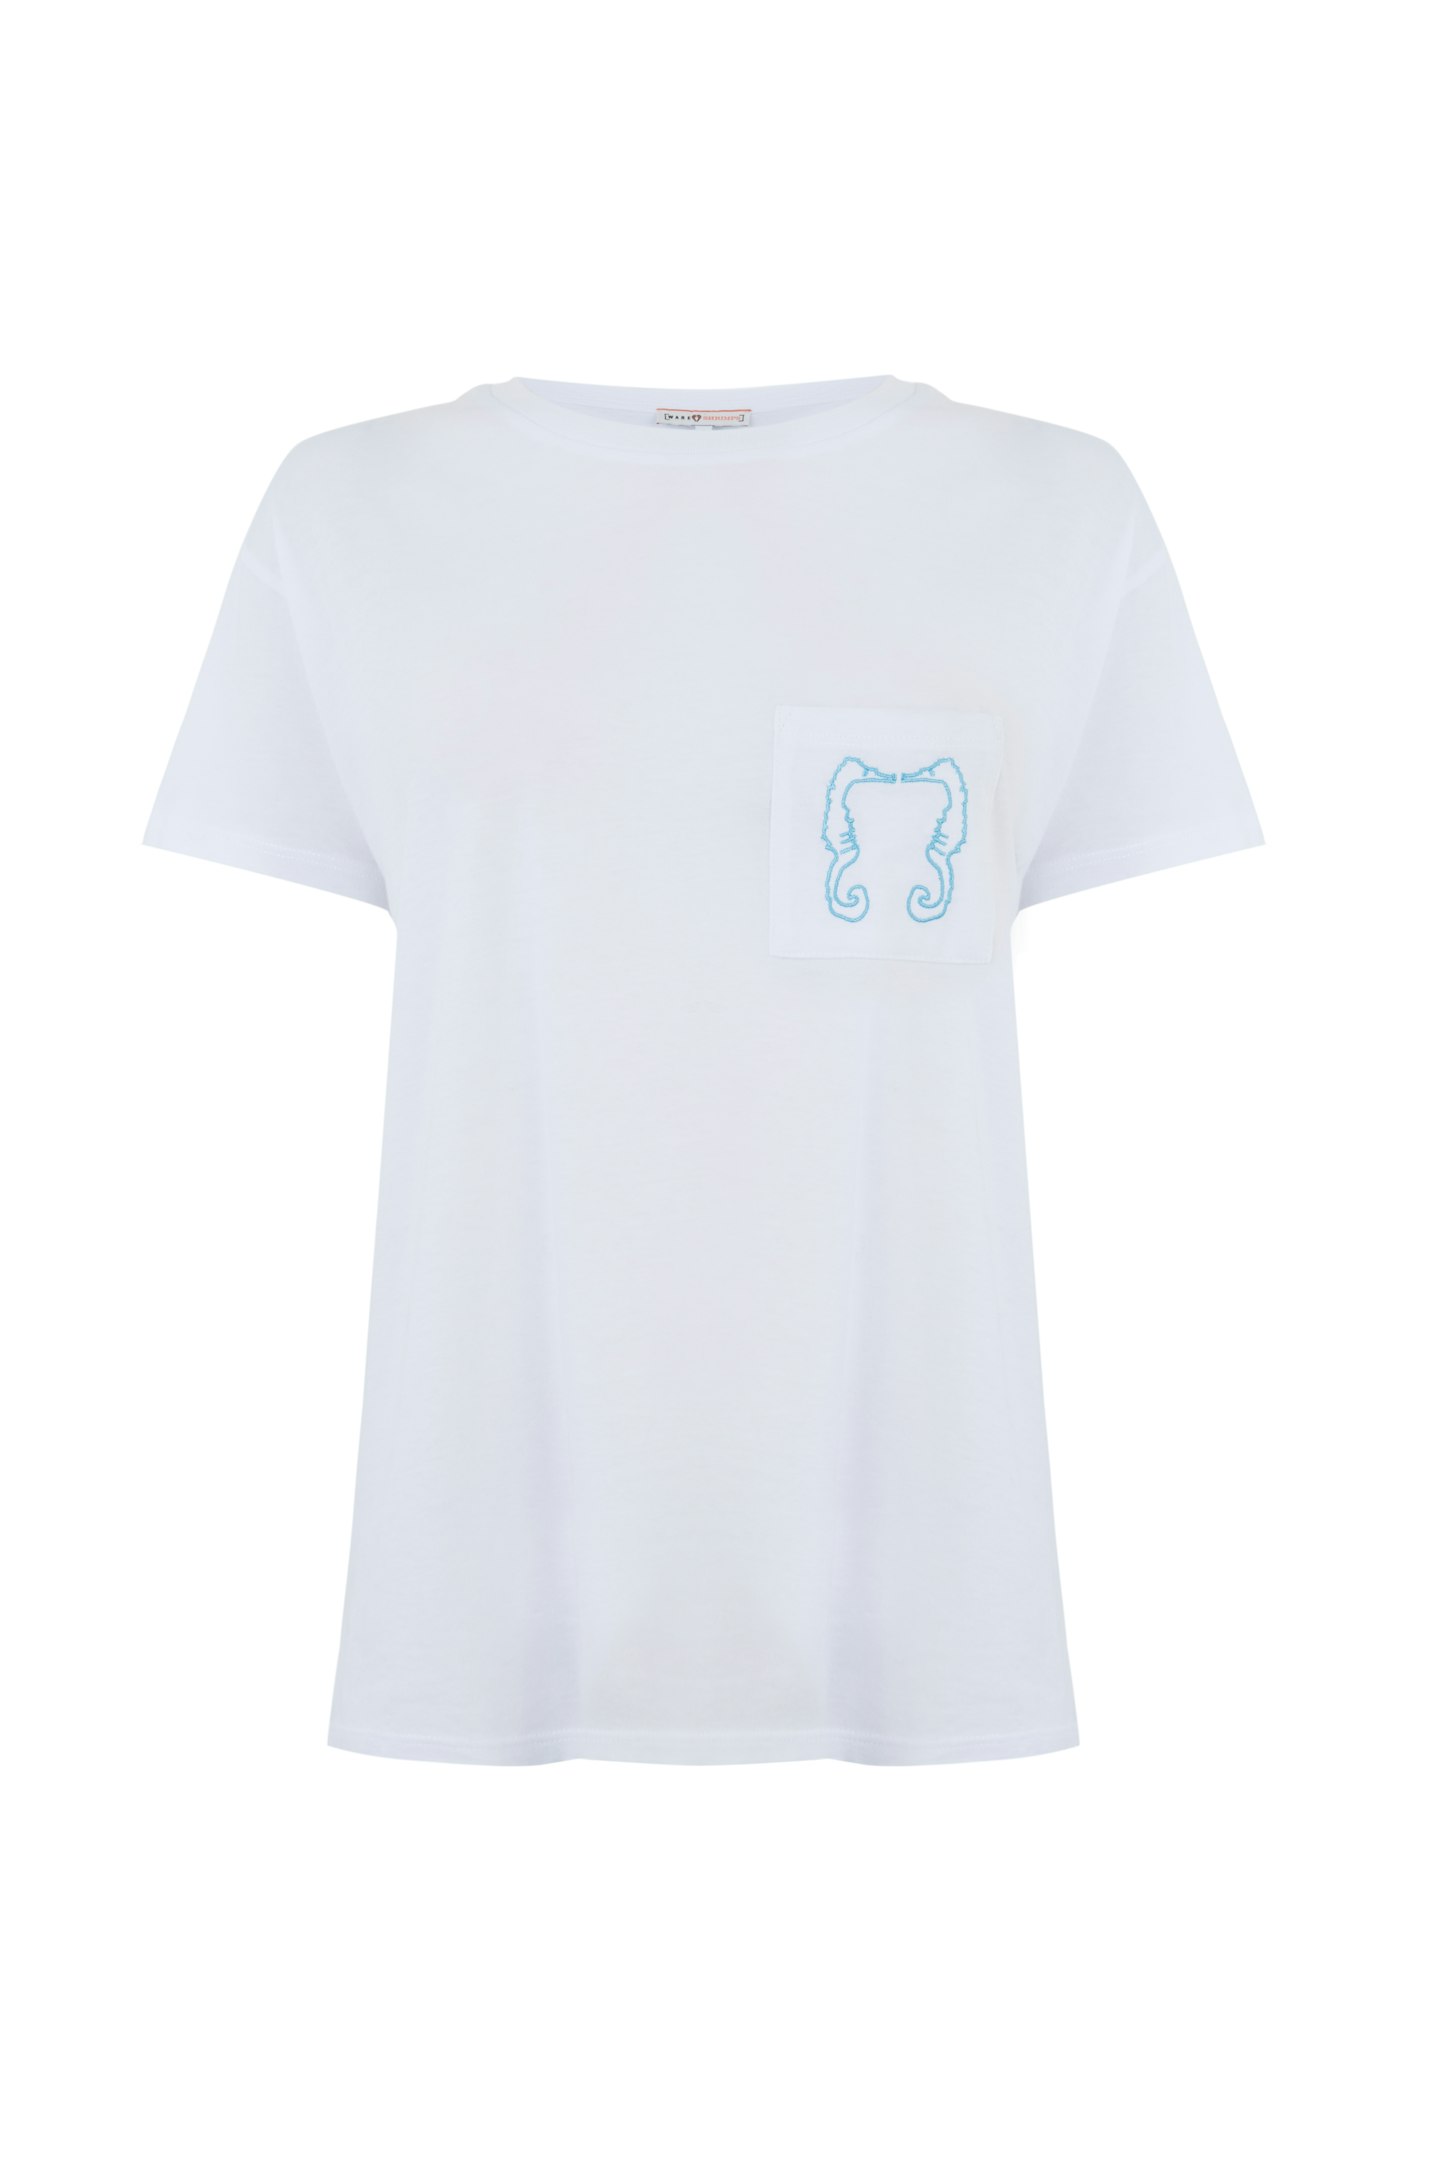 Warehouse Shrimps seahorse t-shirt